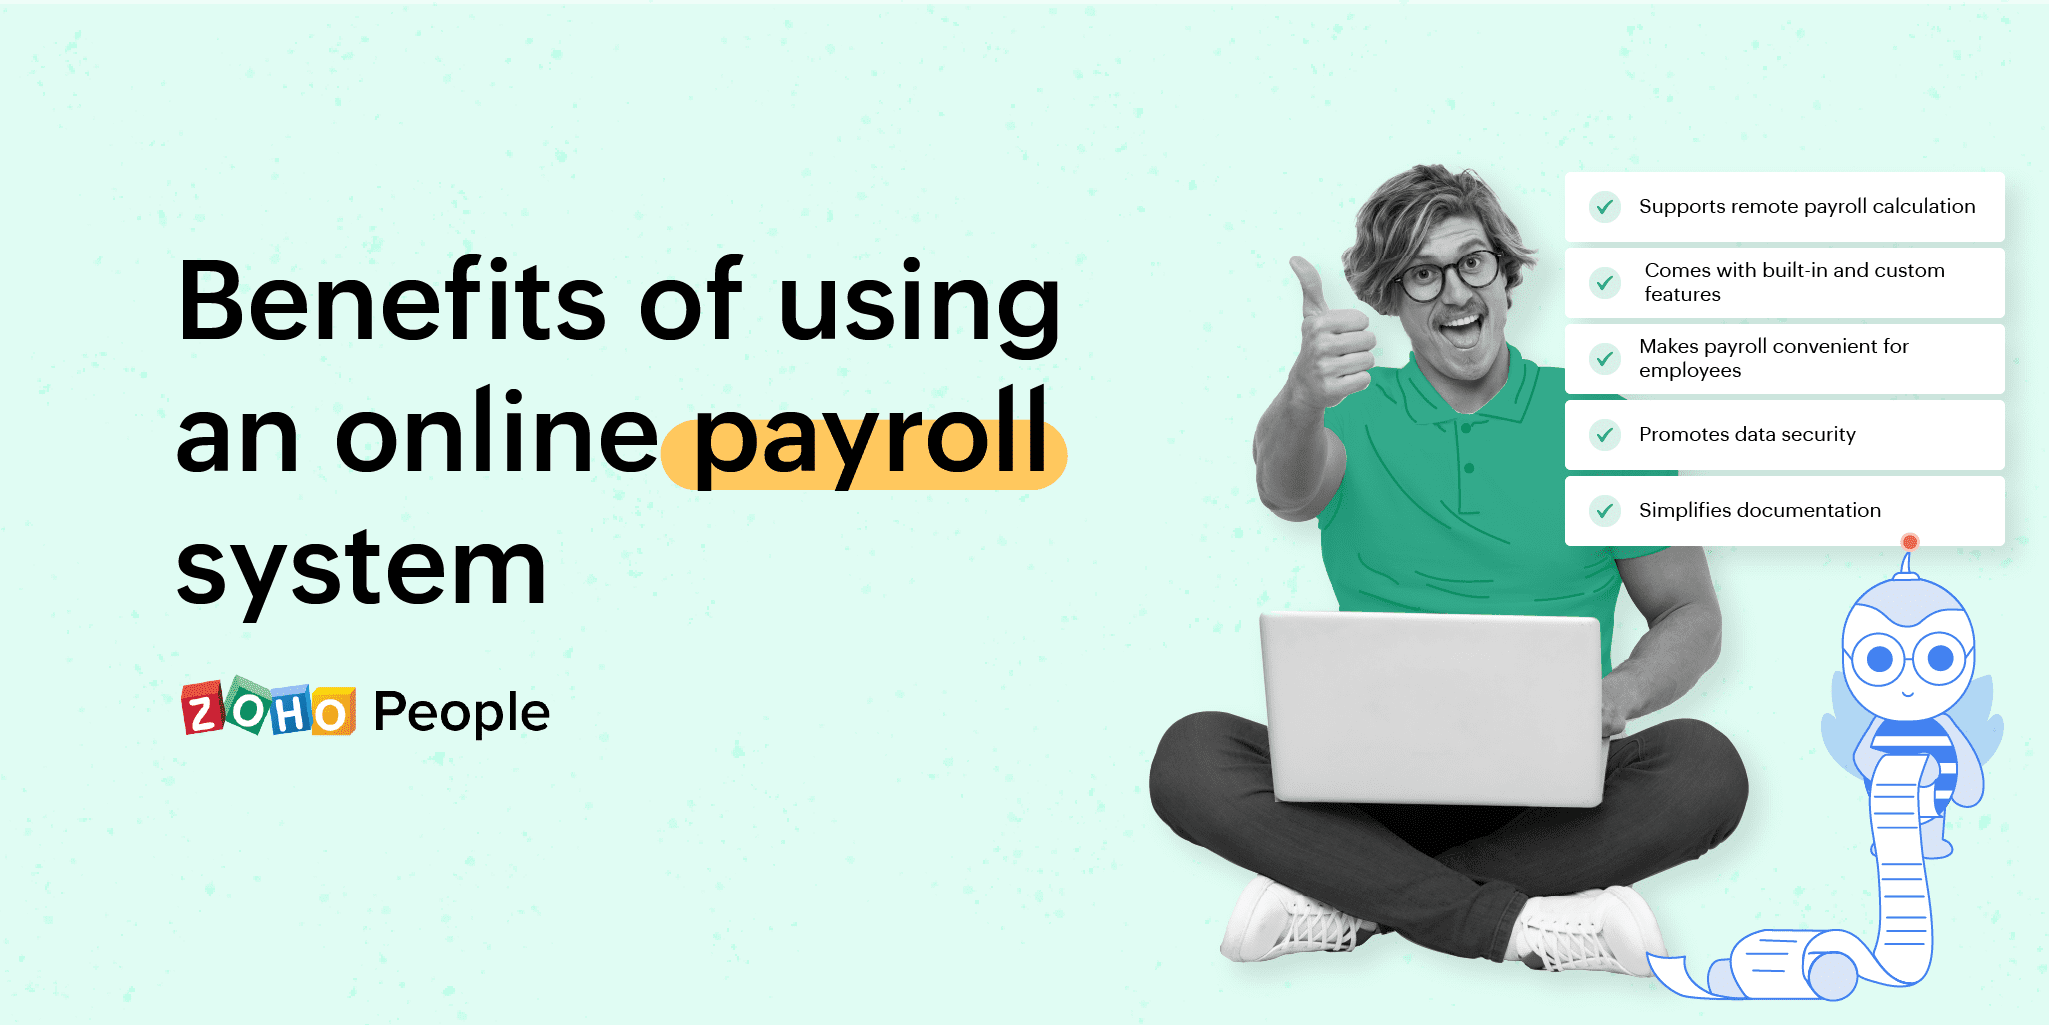 Benefits of online payroll